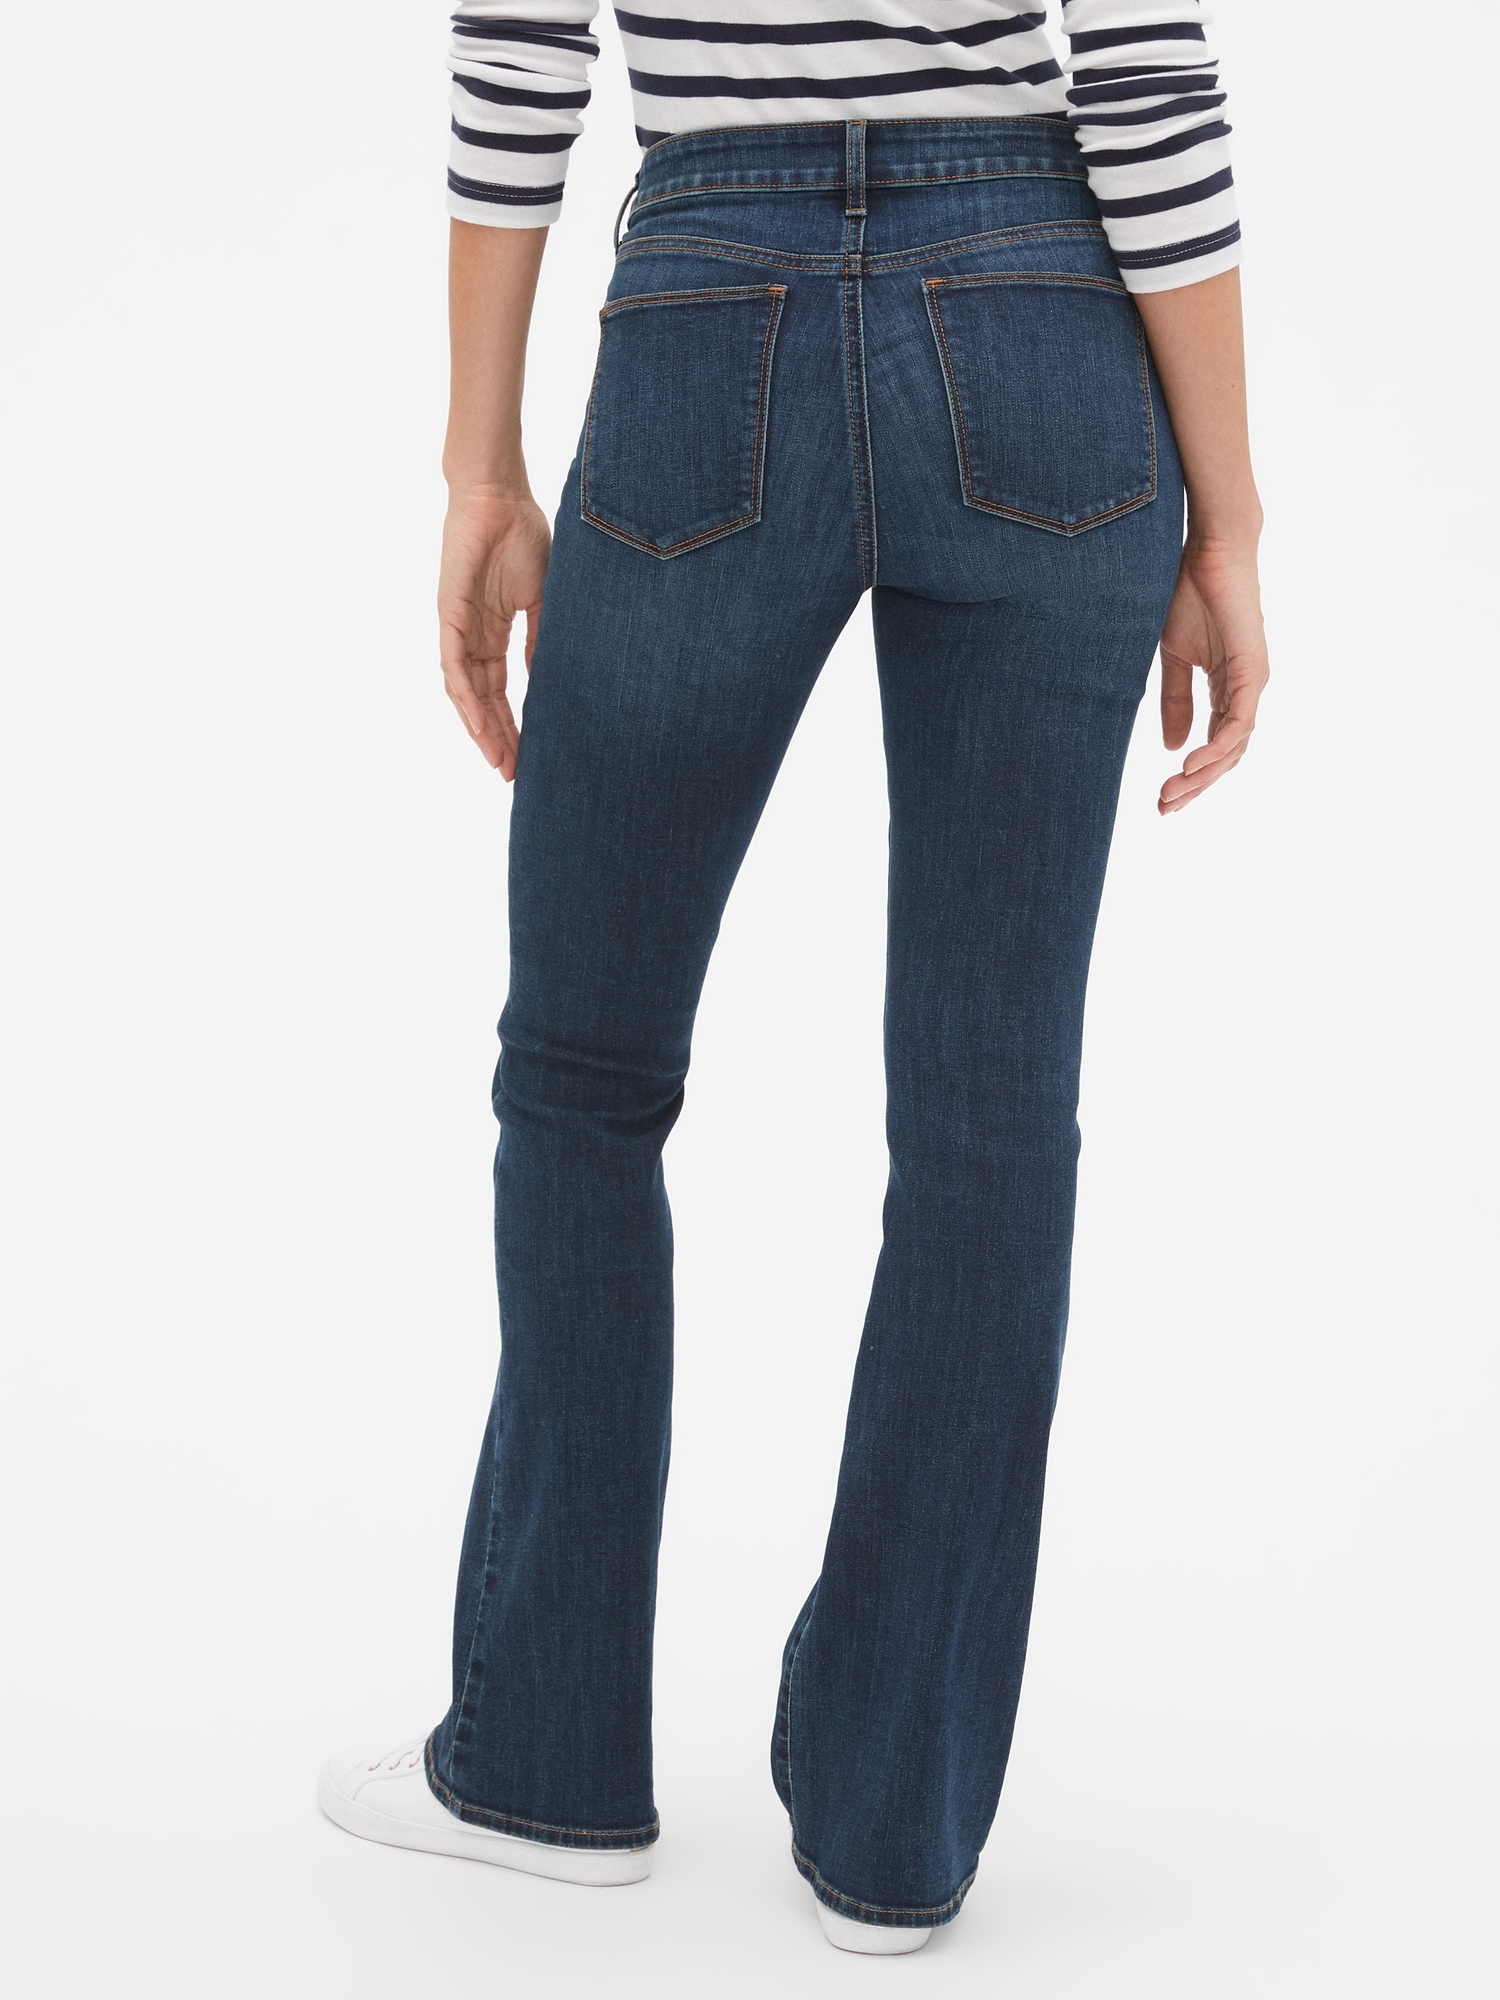 gap 1969 curvy boot jeans